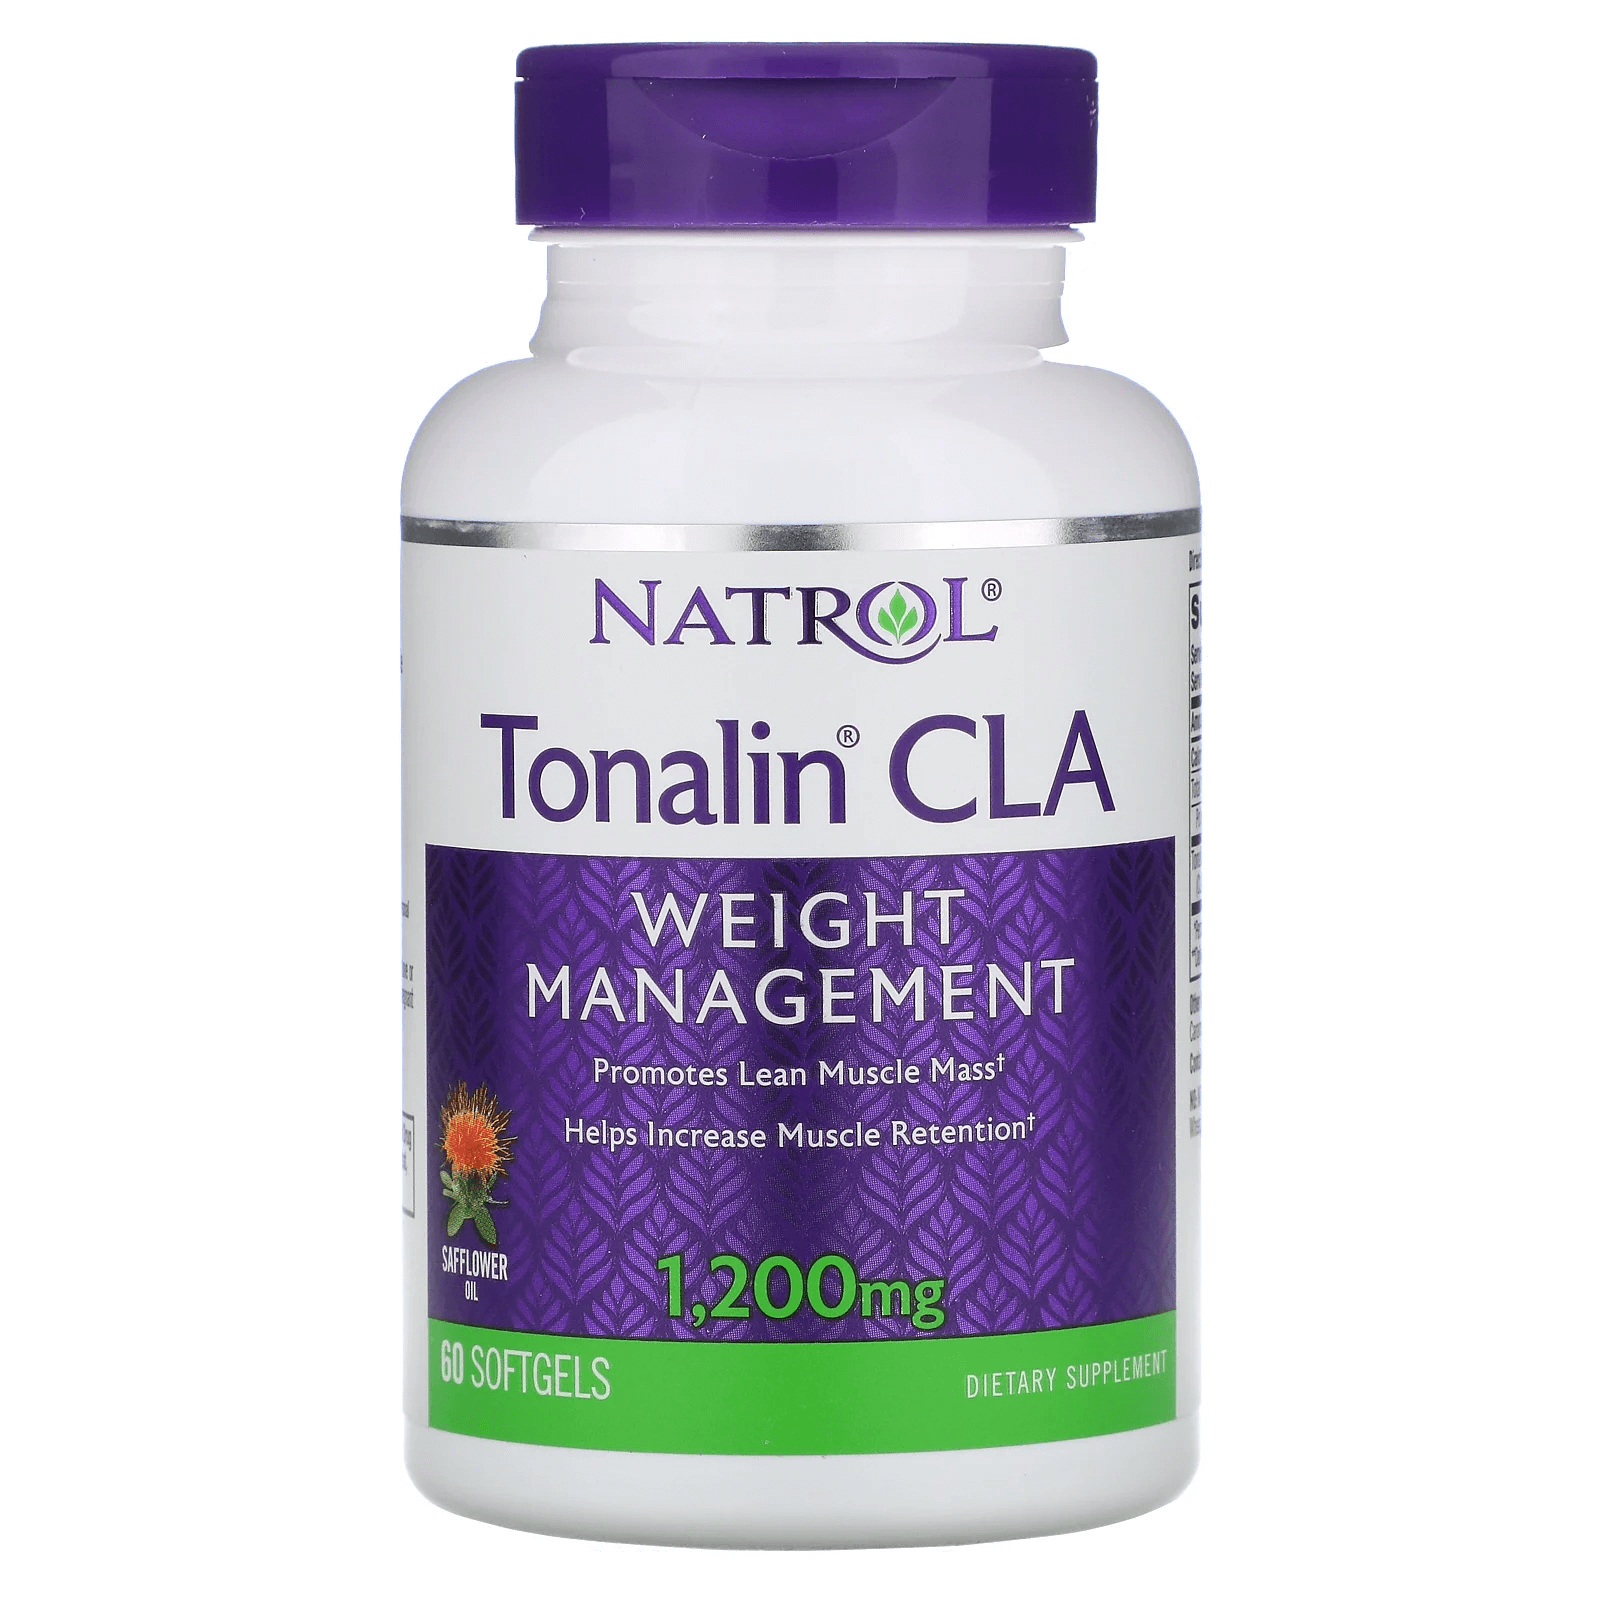 конъюгированная линолевая кислота california gold nutrition cla 1000 мг 90 мягких таблеток Tonalin CLA, конъюгированная линолевая кислота (КЛК), 1200 мг, 60 мягких таблеток, Natrol